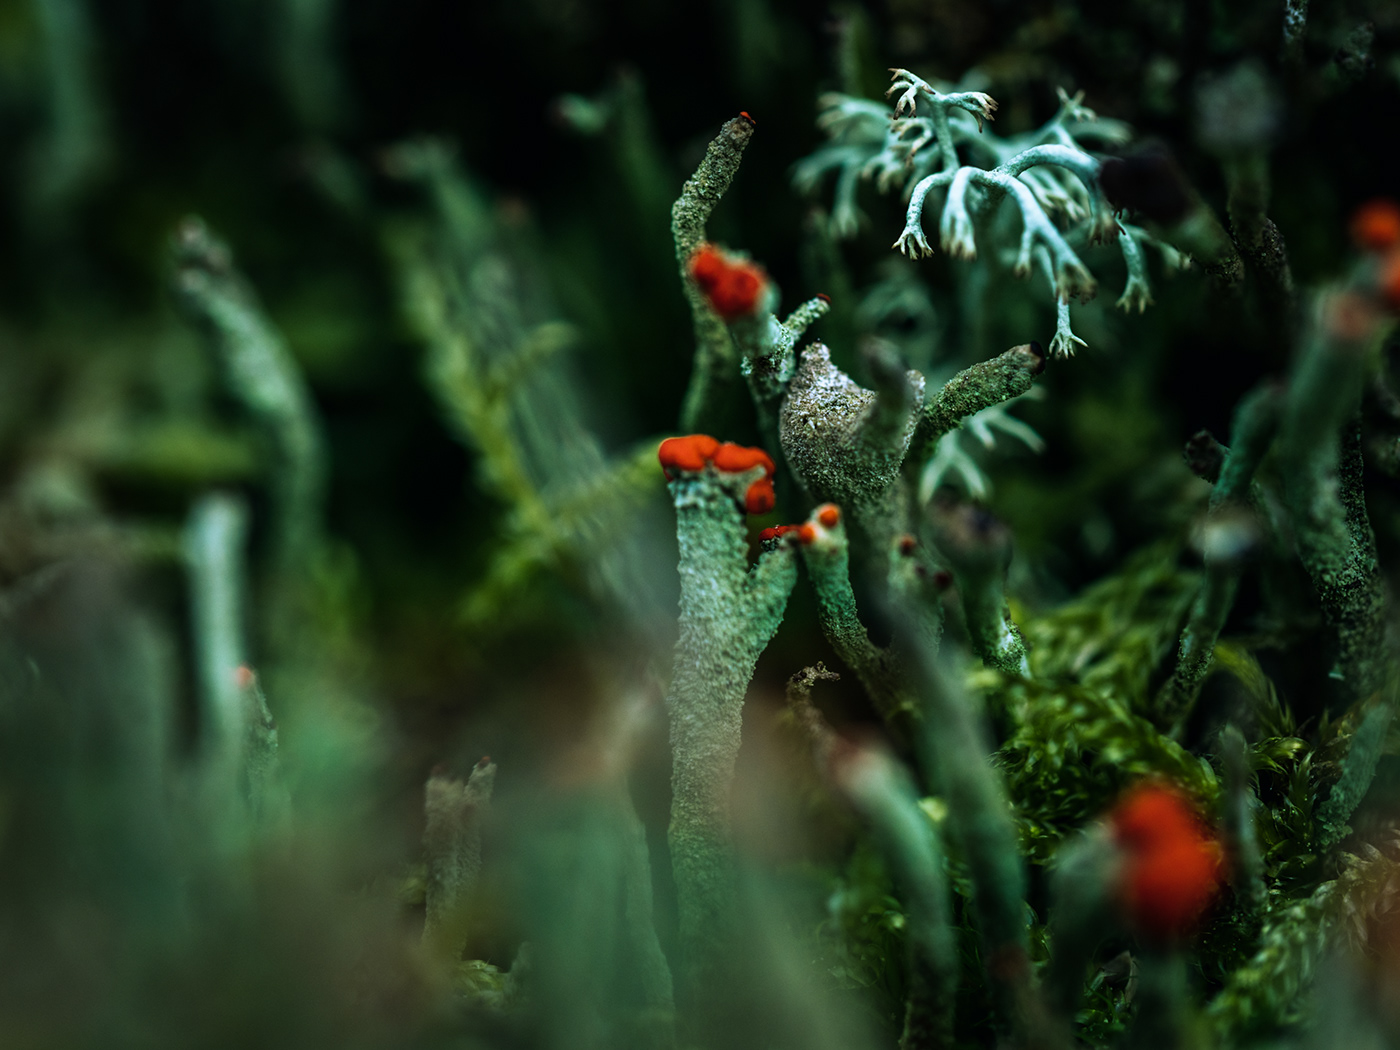 blooming earth green lichen macro Macro Photography mushroom Nature nature photography plants